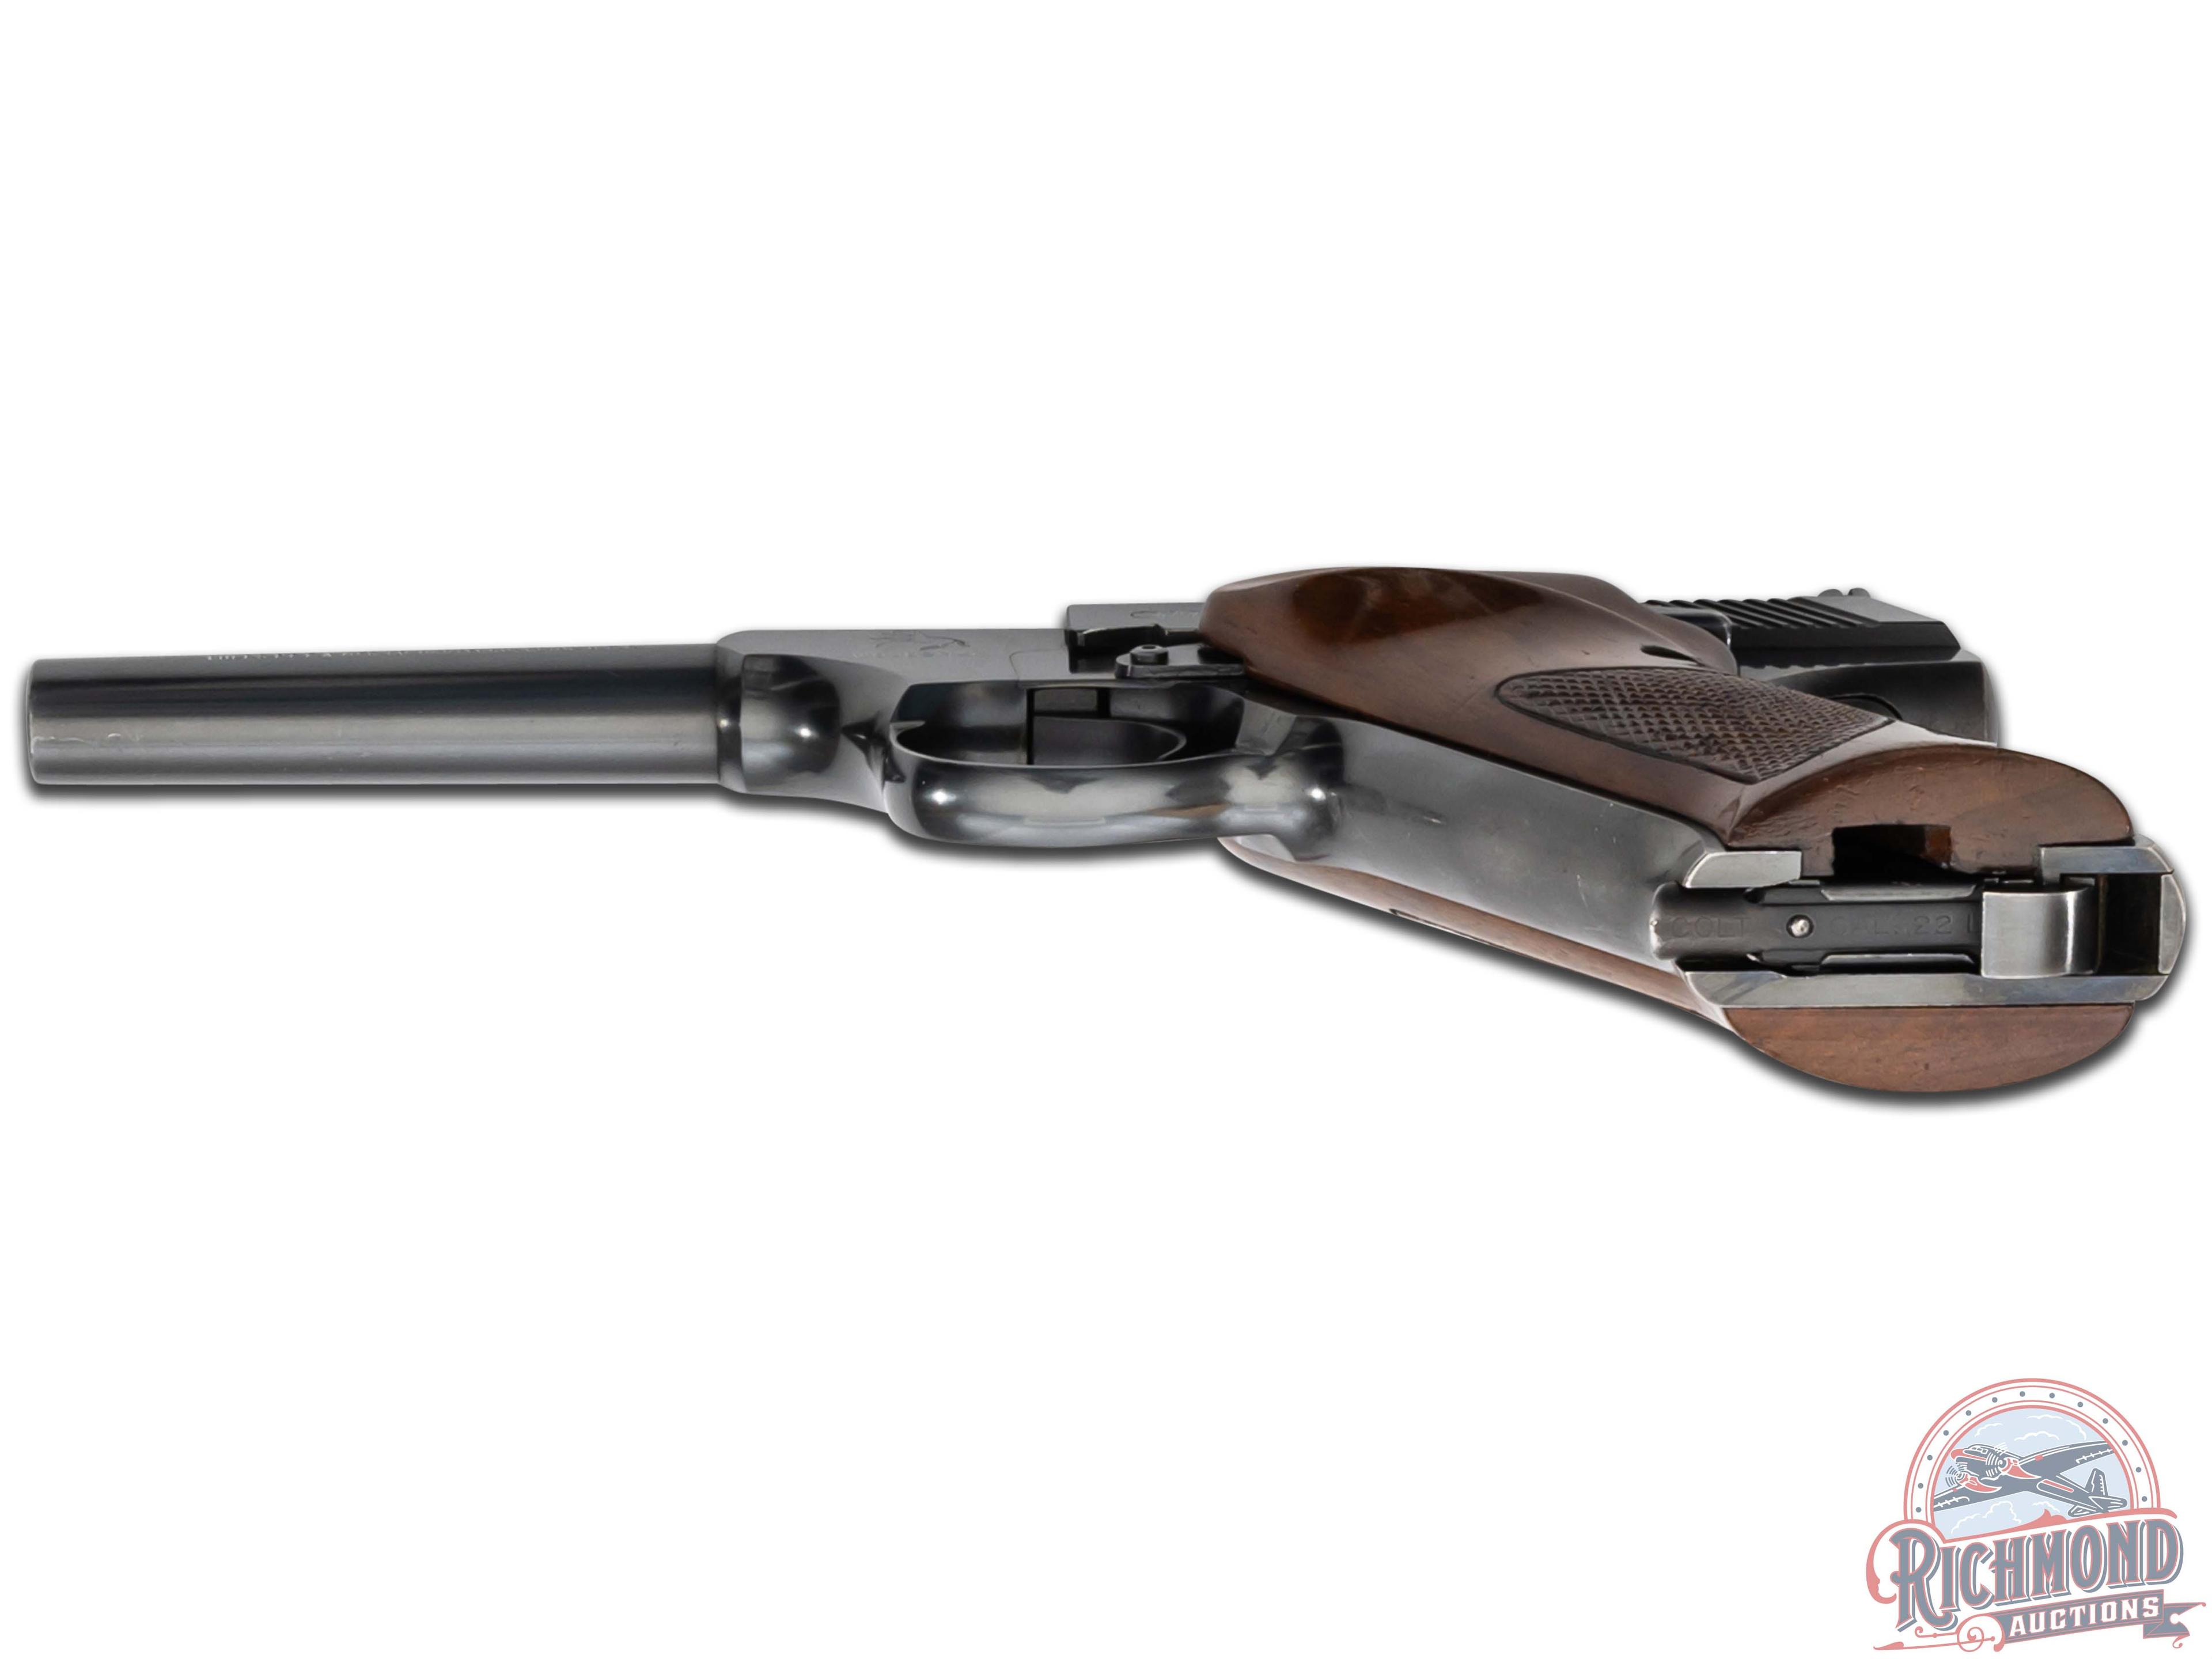 1949 Second Series Colt Woodsman .22 LR Semi-Automatic Target Pistol